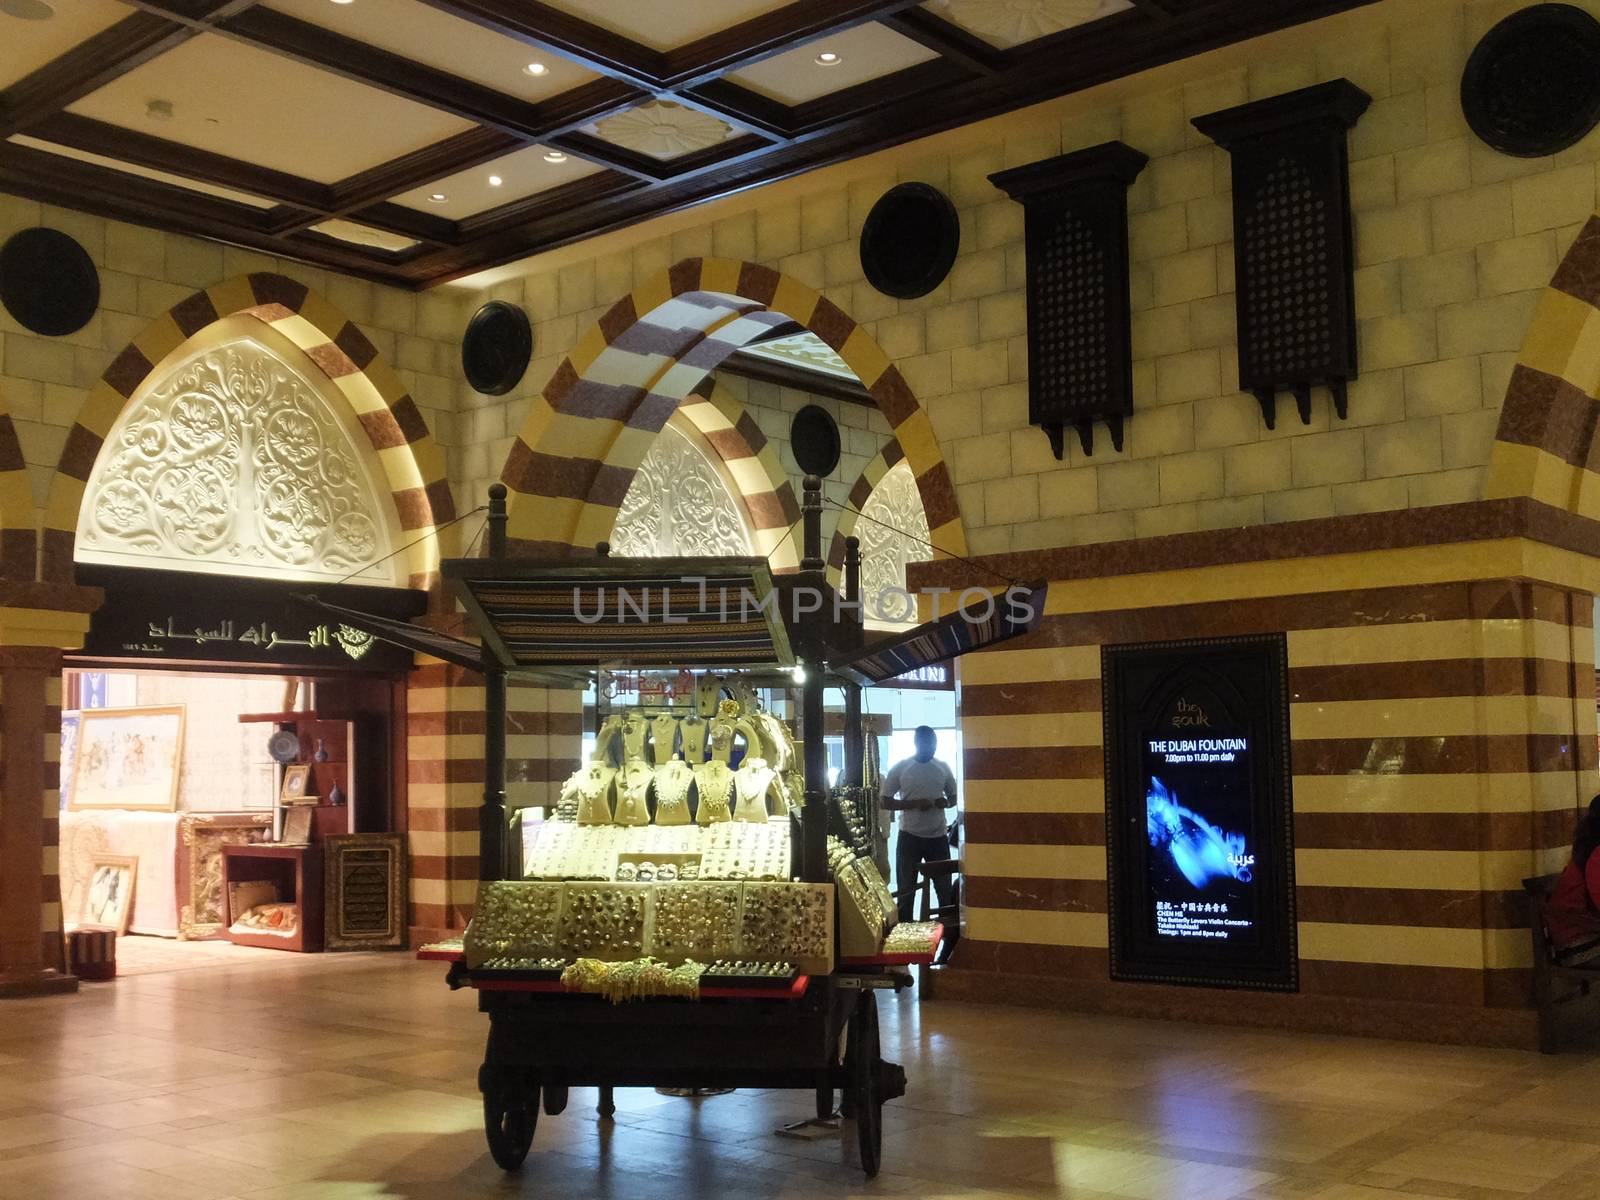 The Souk at Dubai Mall in Dubai, UAE by sainaniritu